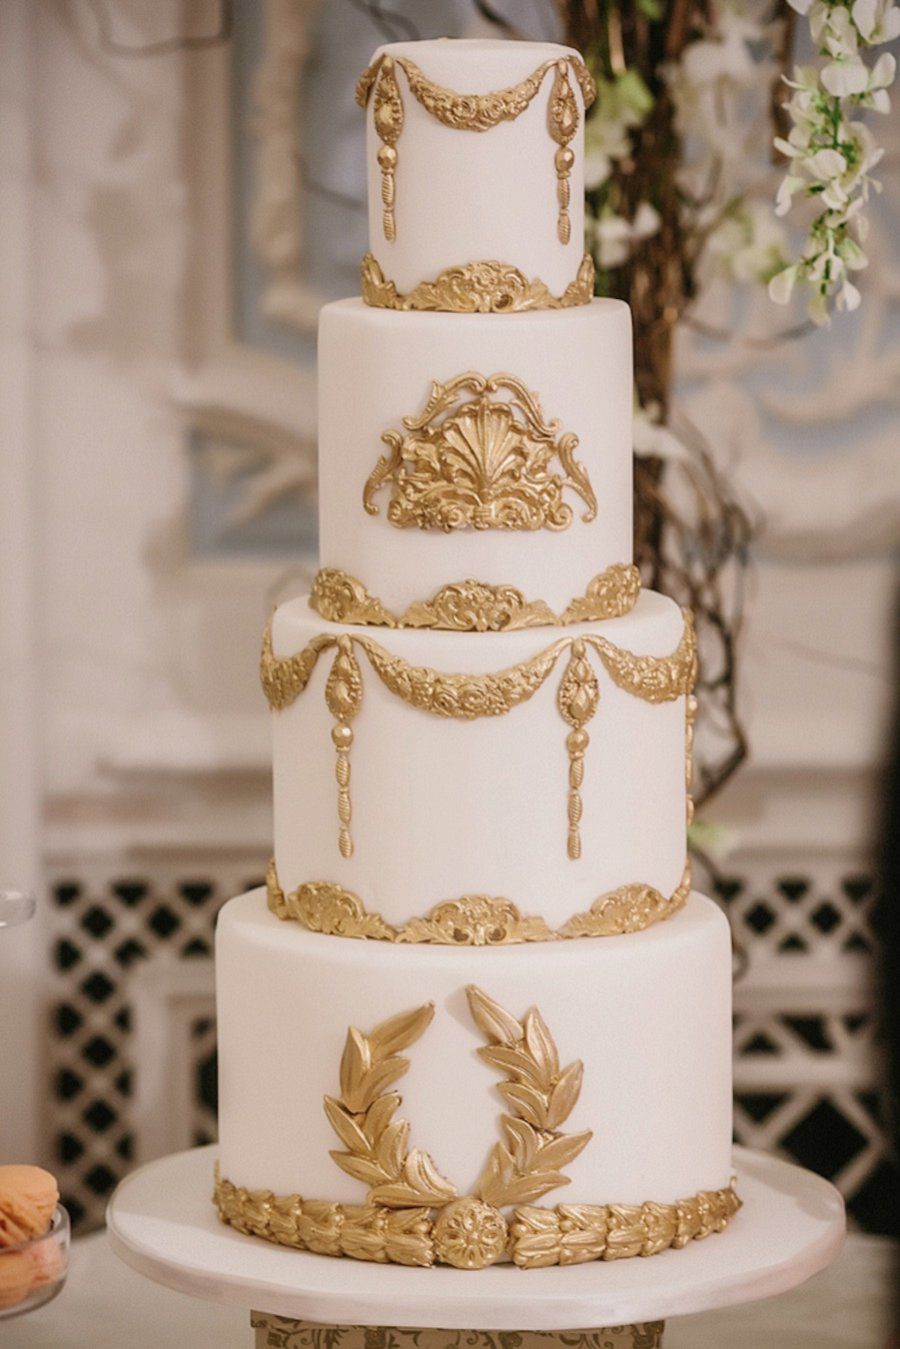 Best Wedding Cakes in Gurgaon - Top 40 Bakers for Designer Cakes